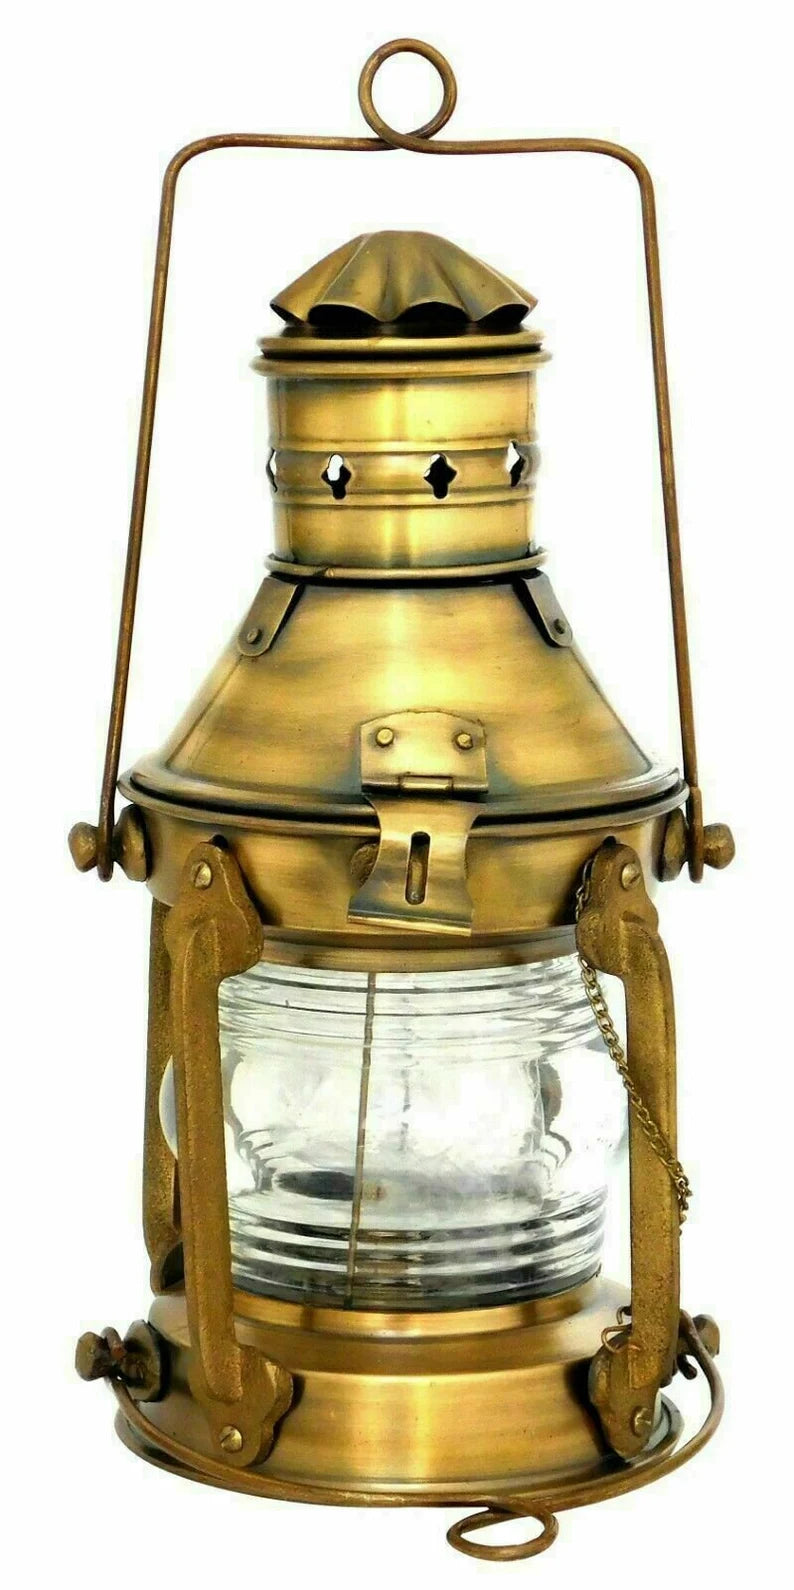 Handmade Antique Vintage Style Brass Nautical Minor Ship Lantern Oil Lamp  at Rs 800.00/piece in Haridwar